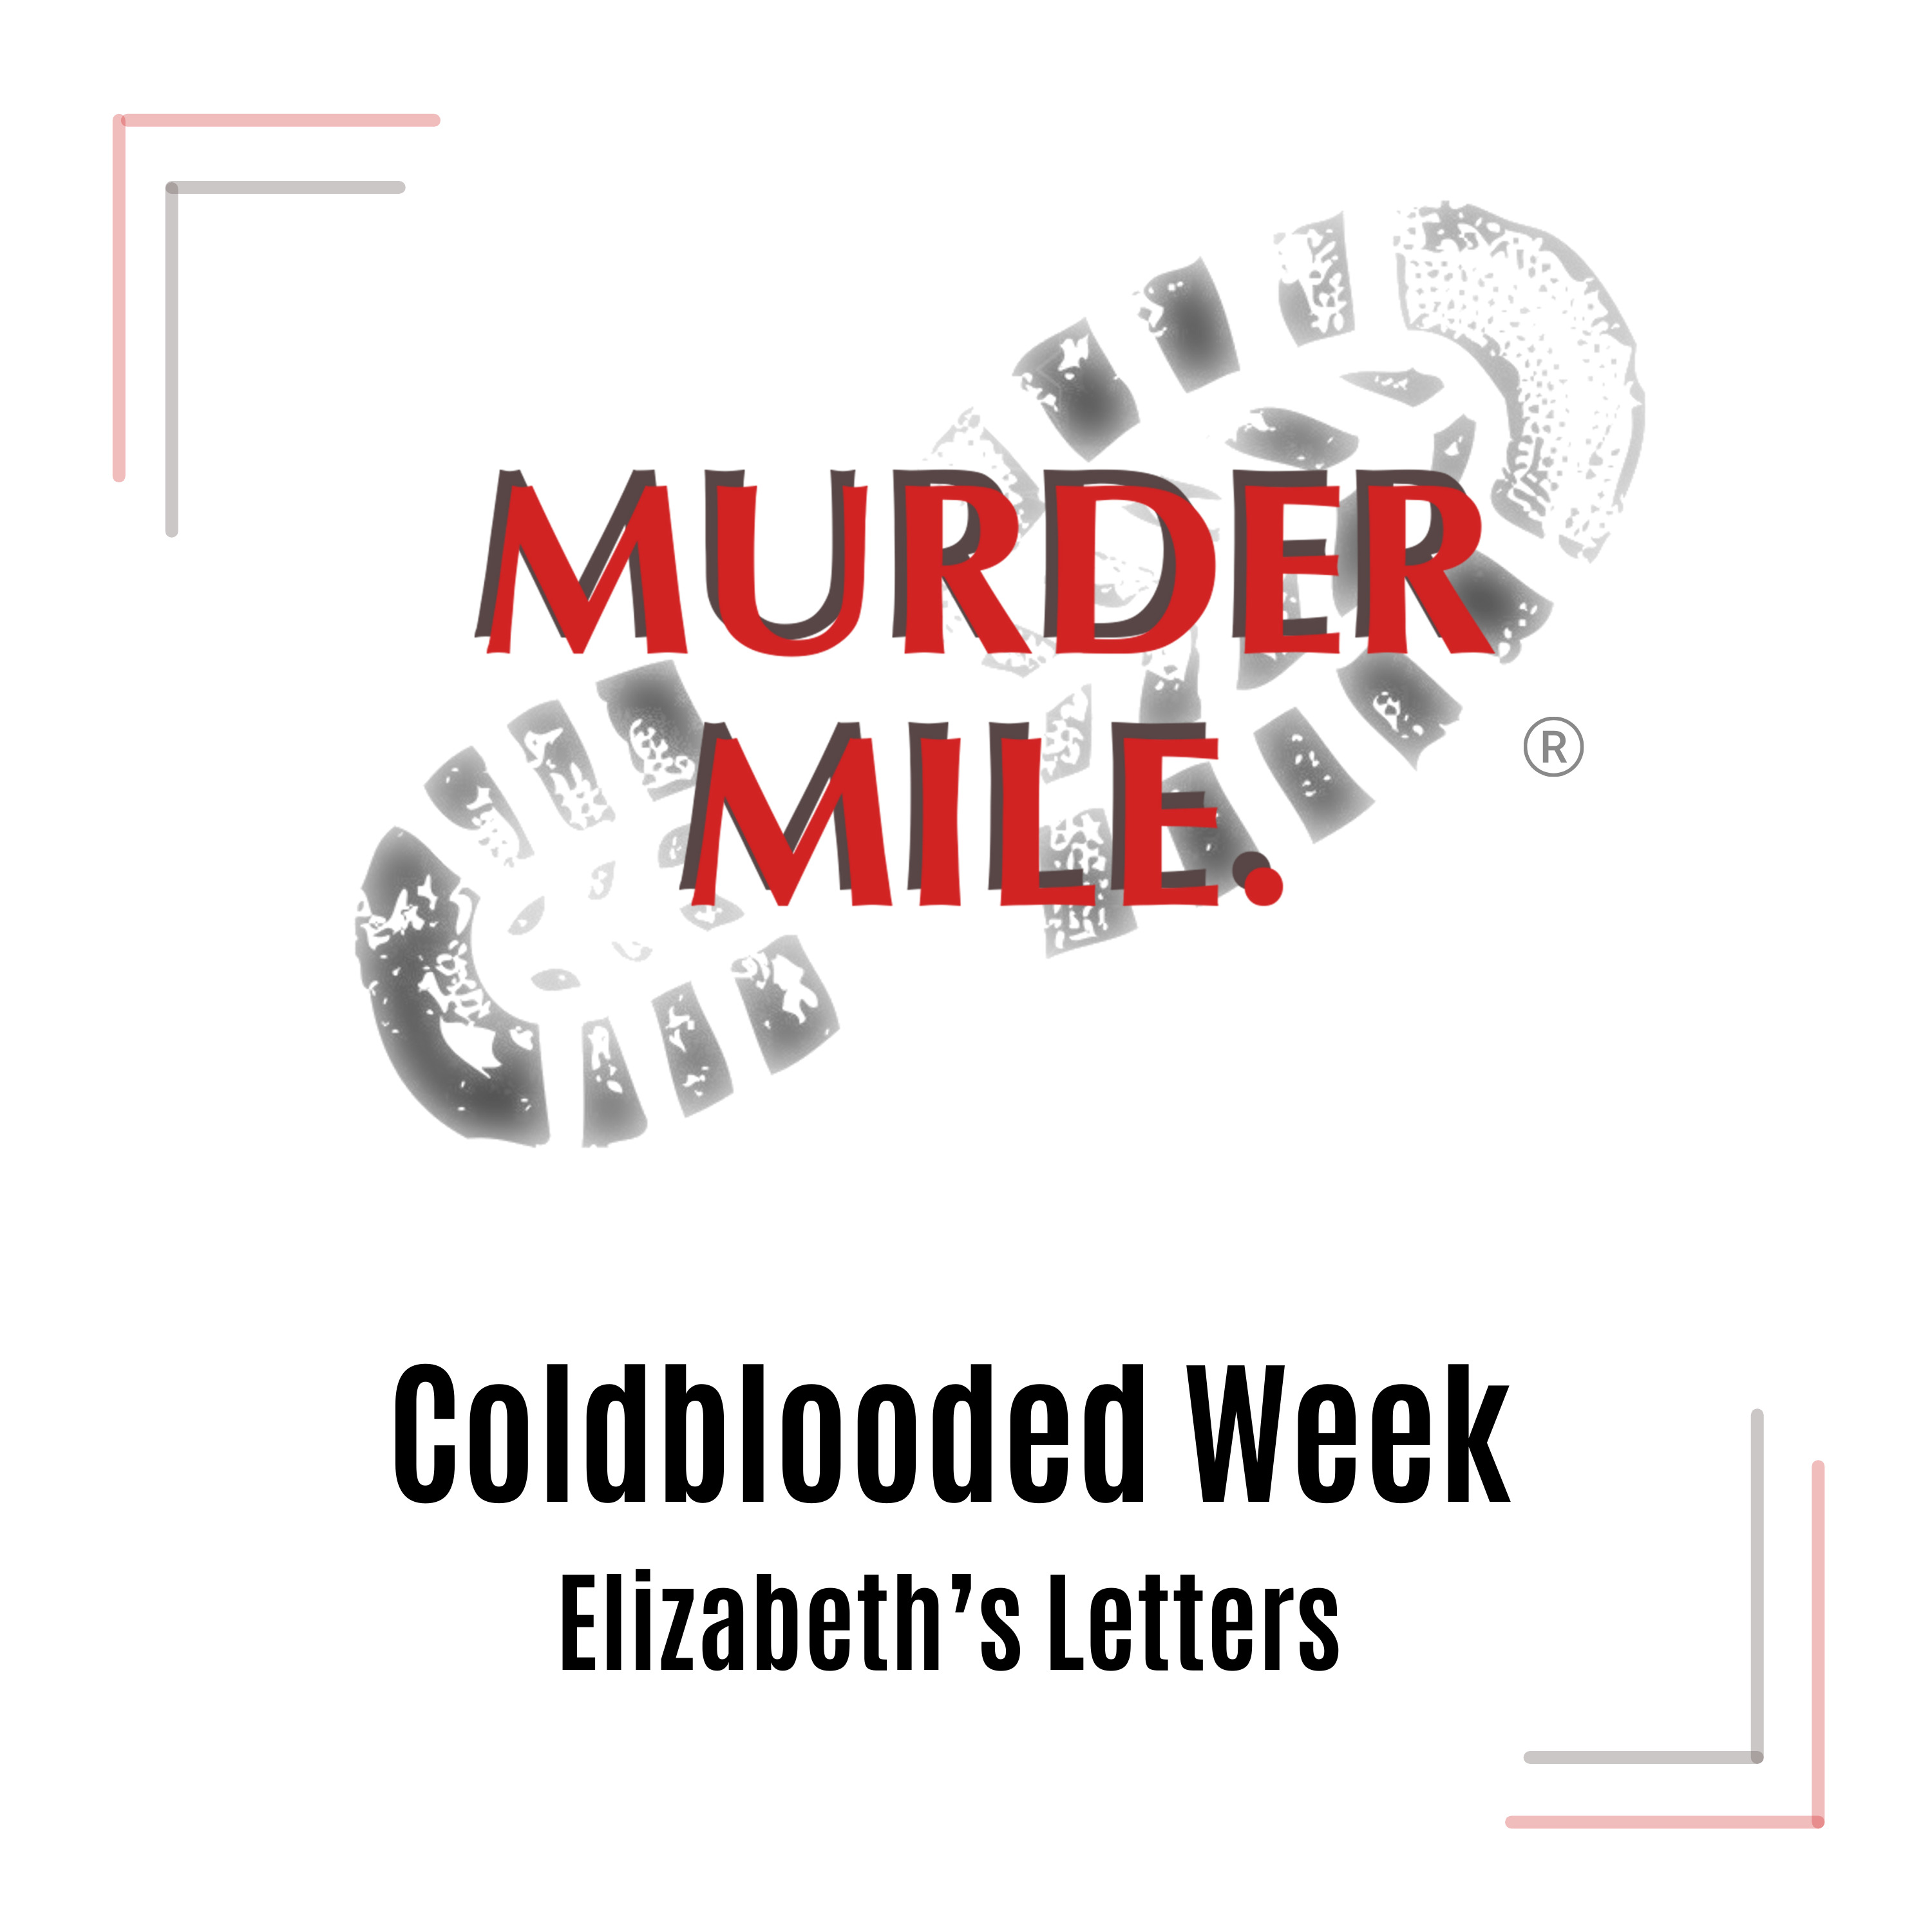 Coldblooded Week - Elizabeth’s Letter from Prison